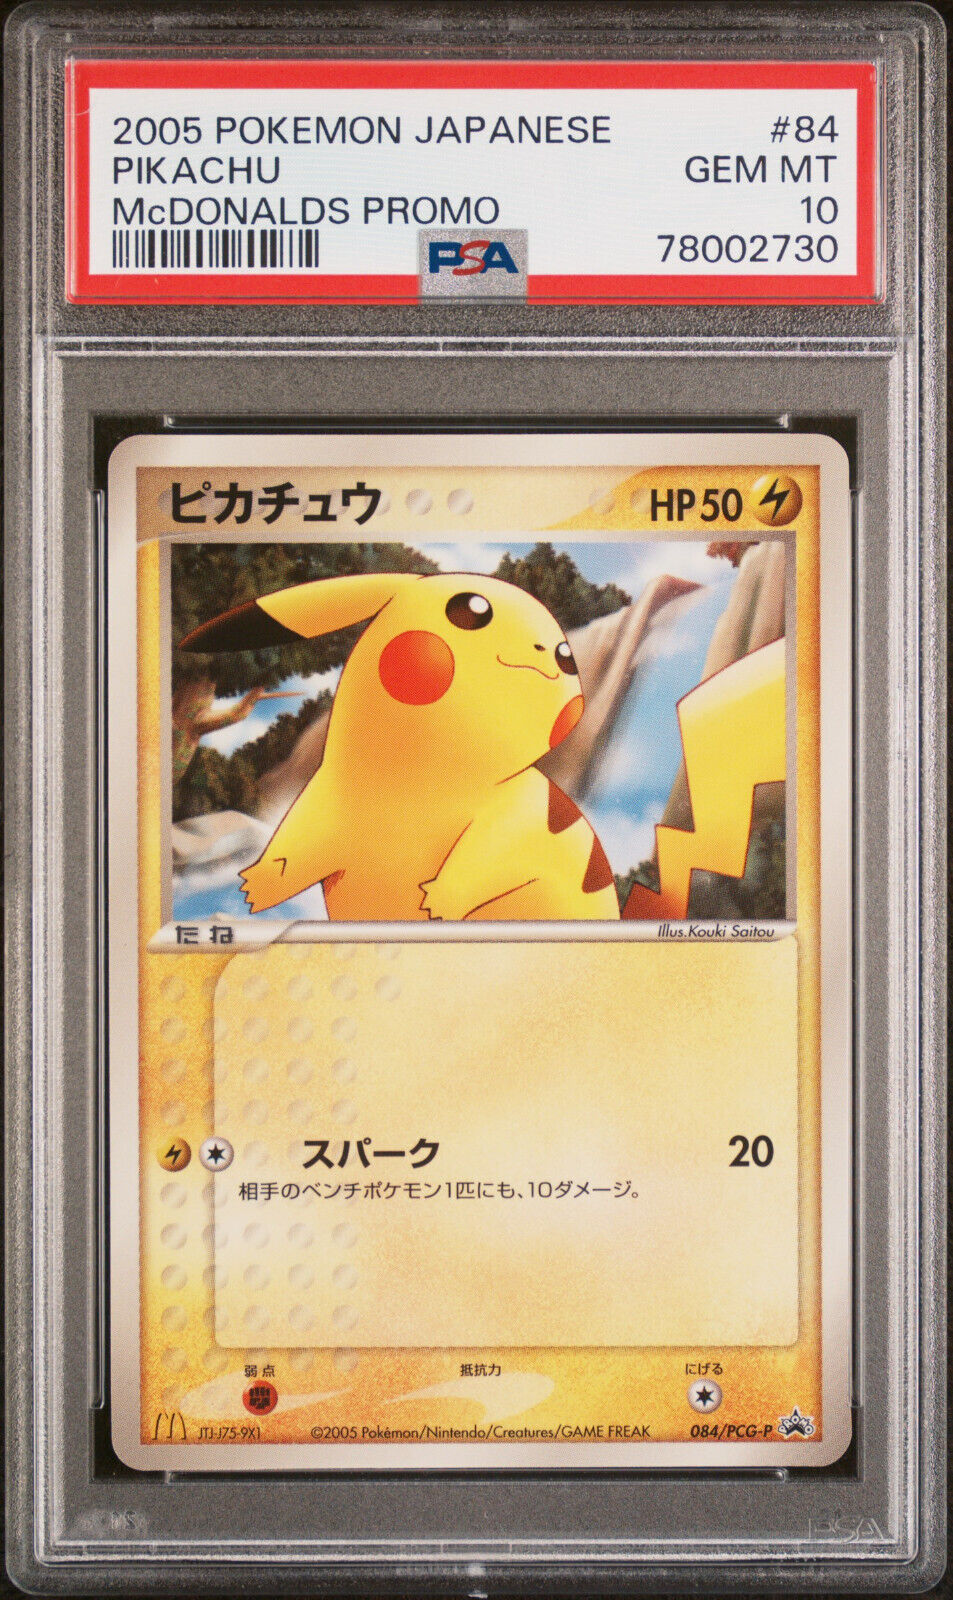 PSA 10 GEM MT Pikachu McDonalds Promo 2005 Japanese Pokemon Card 84 POP 18